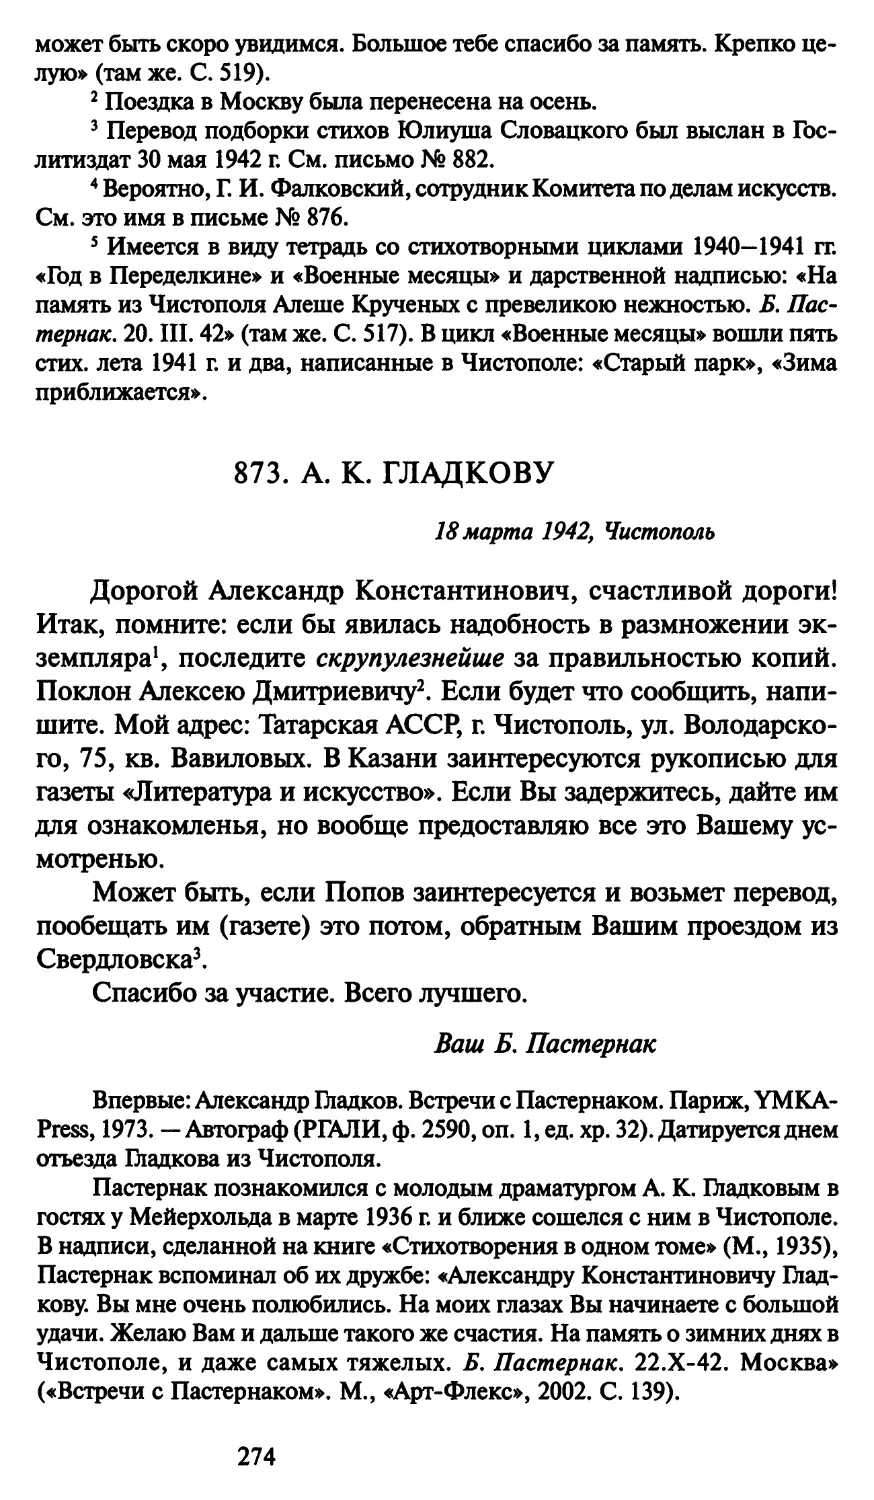 873. А. К. Гладкову 18 марта 1942